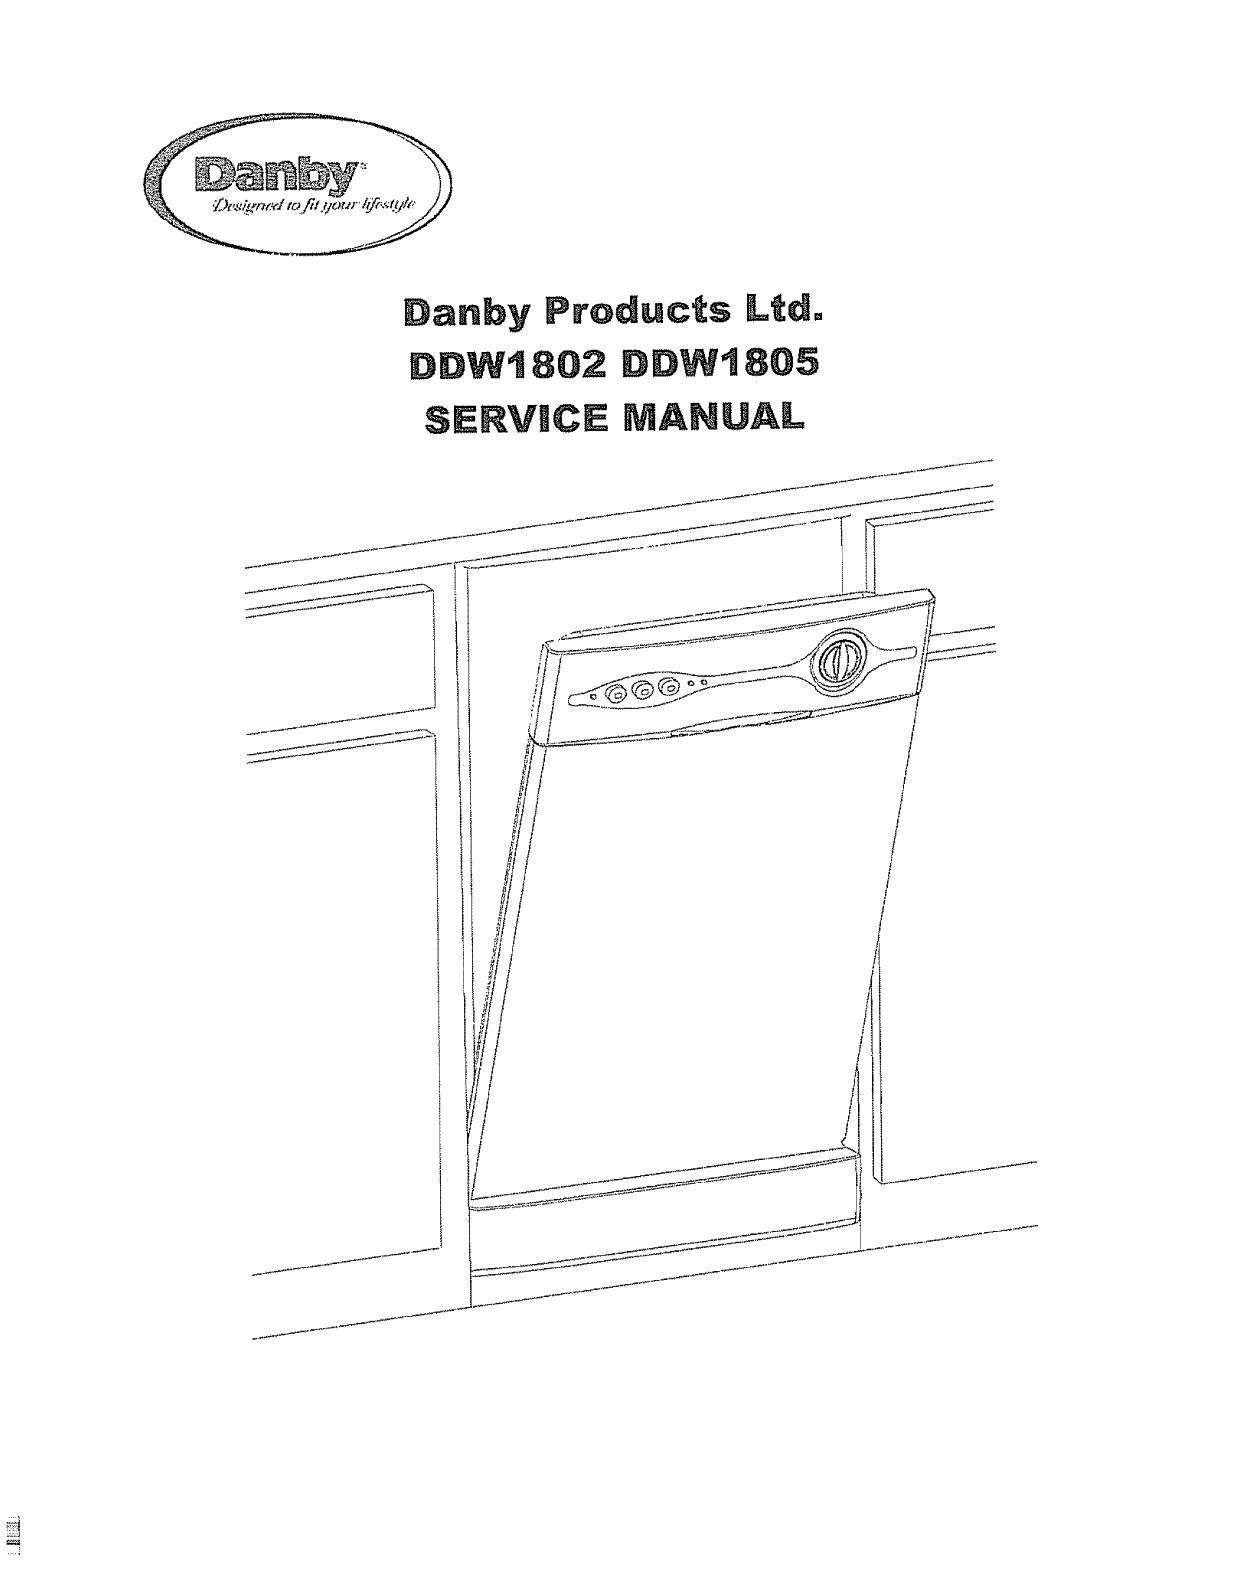 Danby Dishwasher Ddw1802 User Guide Manualsonline Com